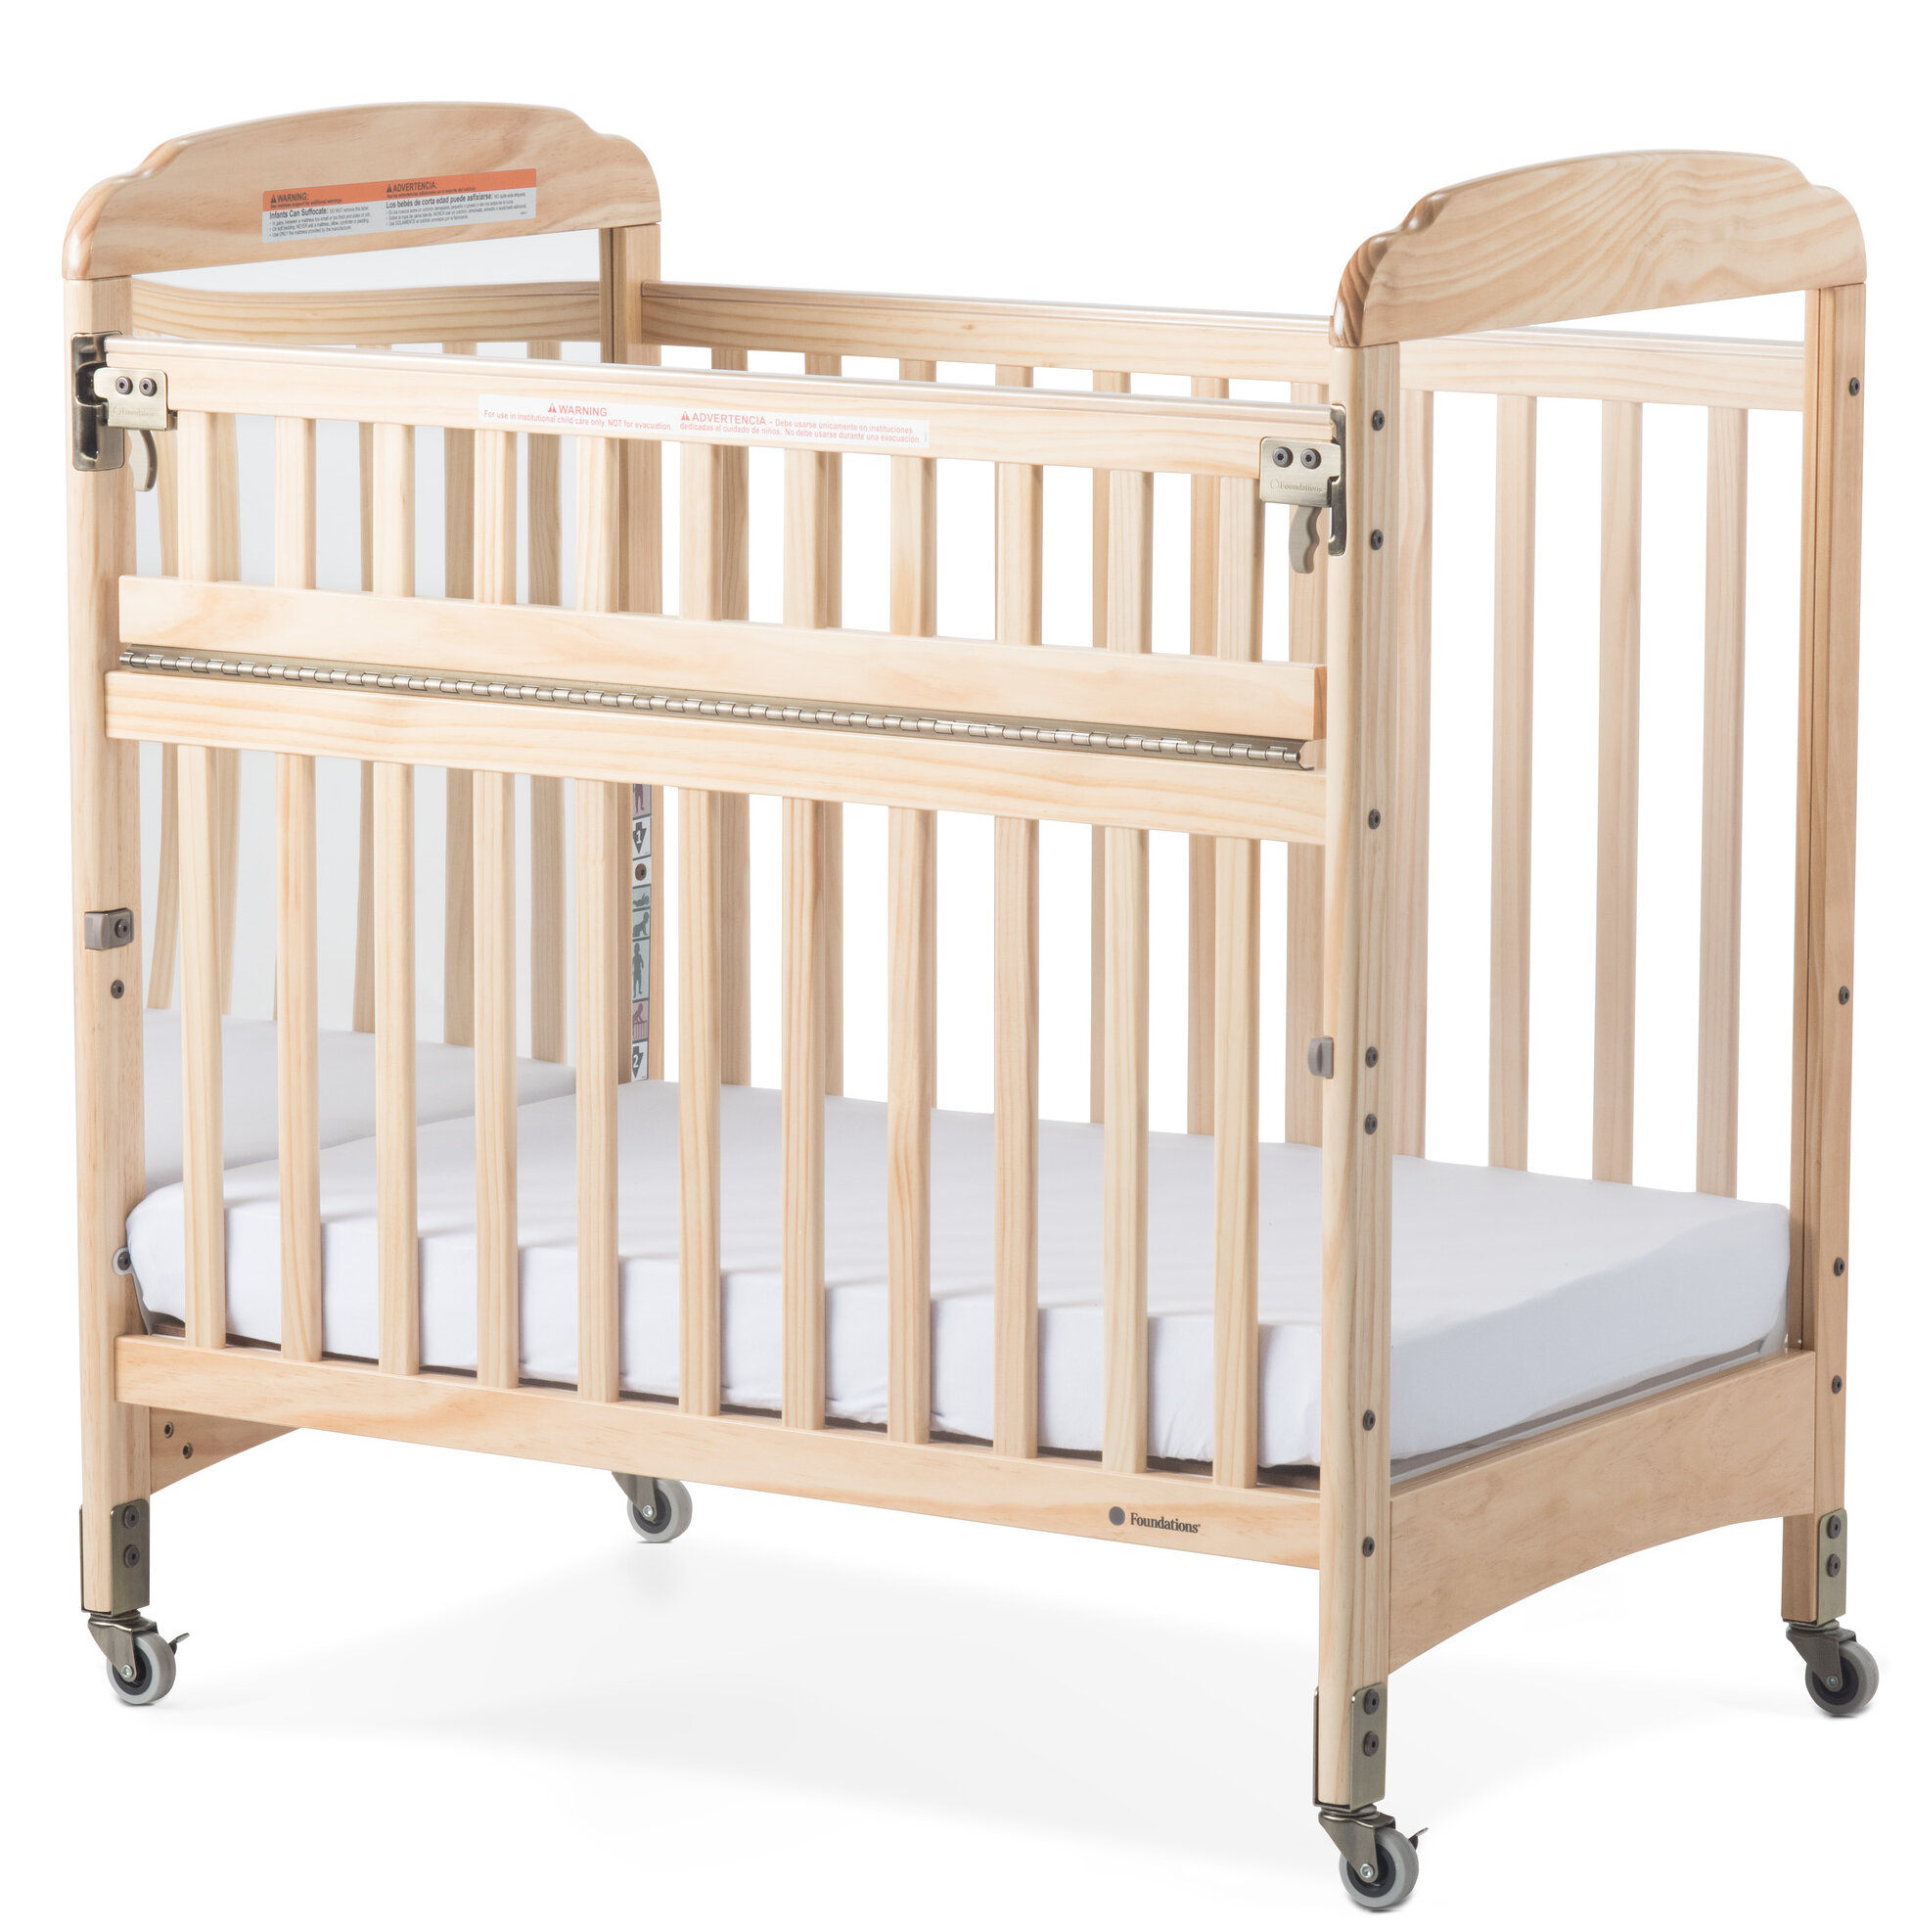 Foundations Serenity® Portable Crib 